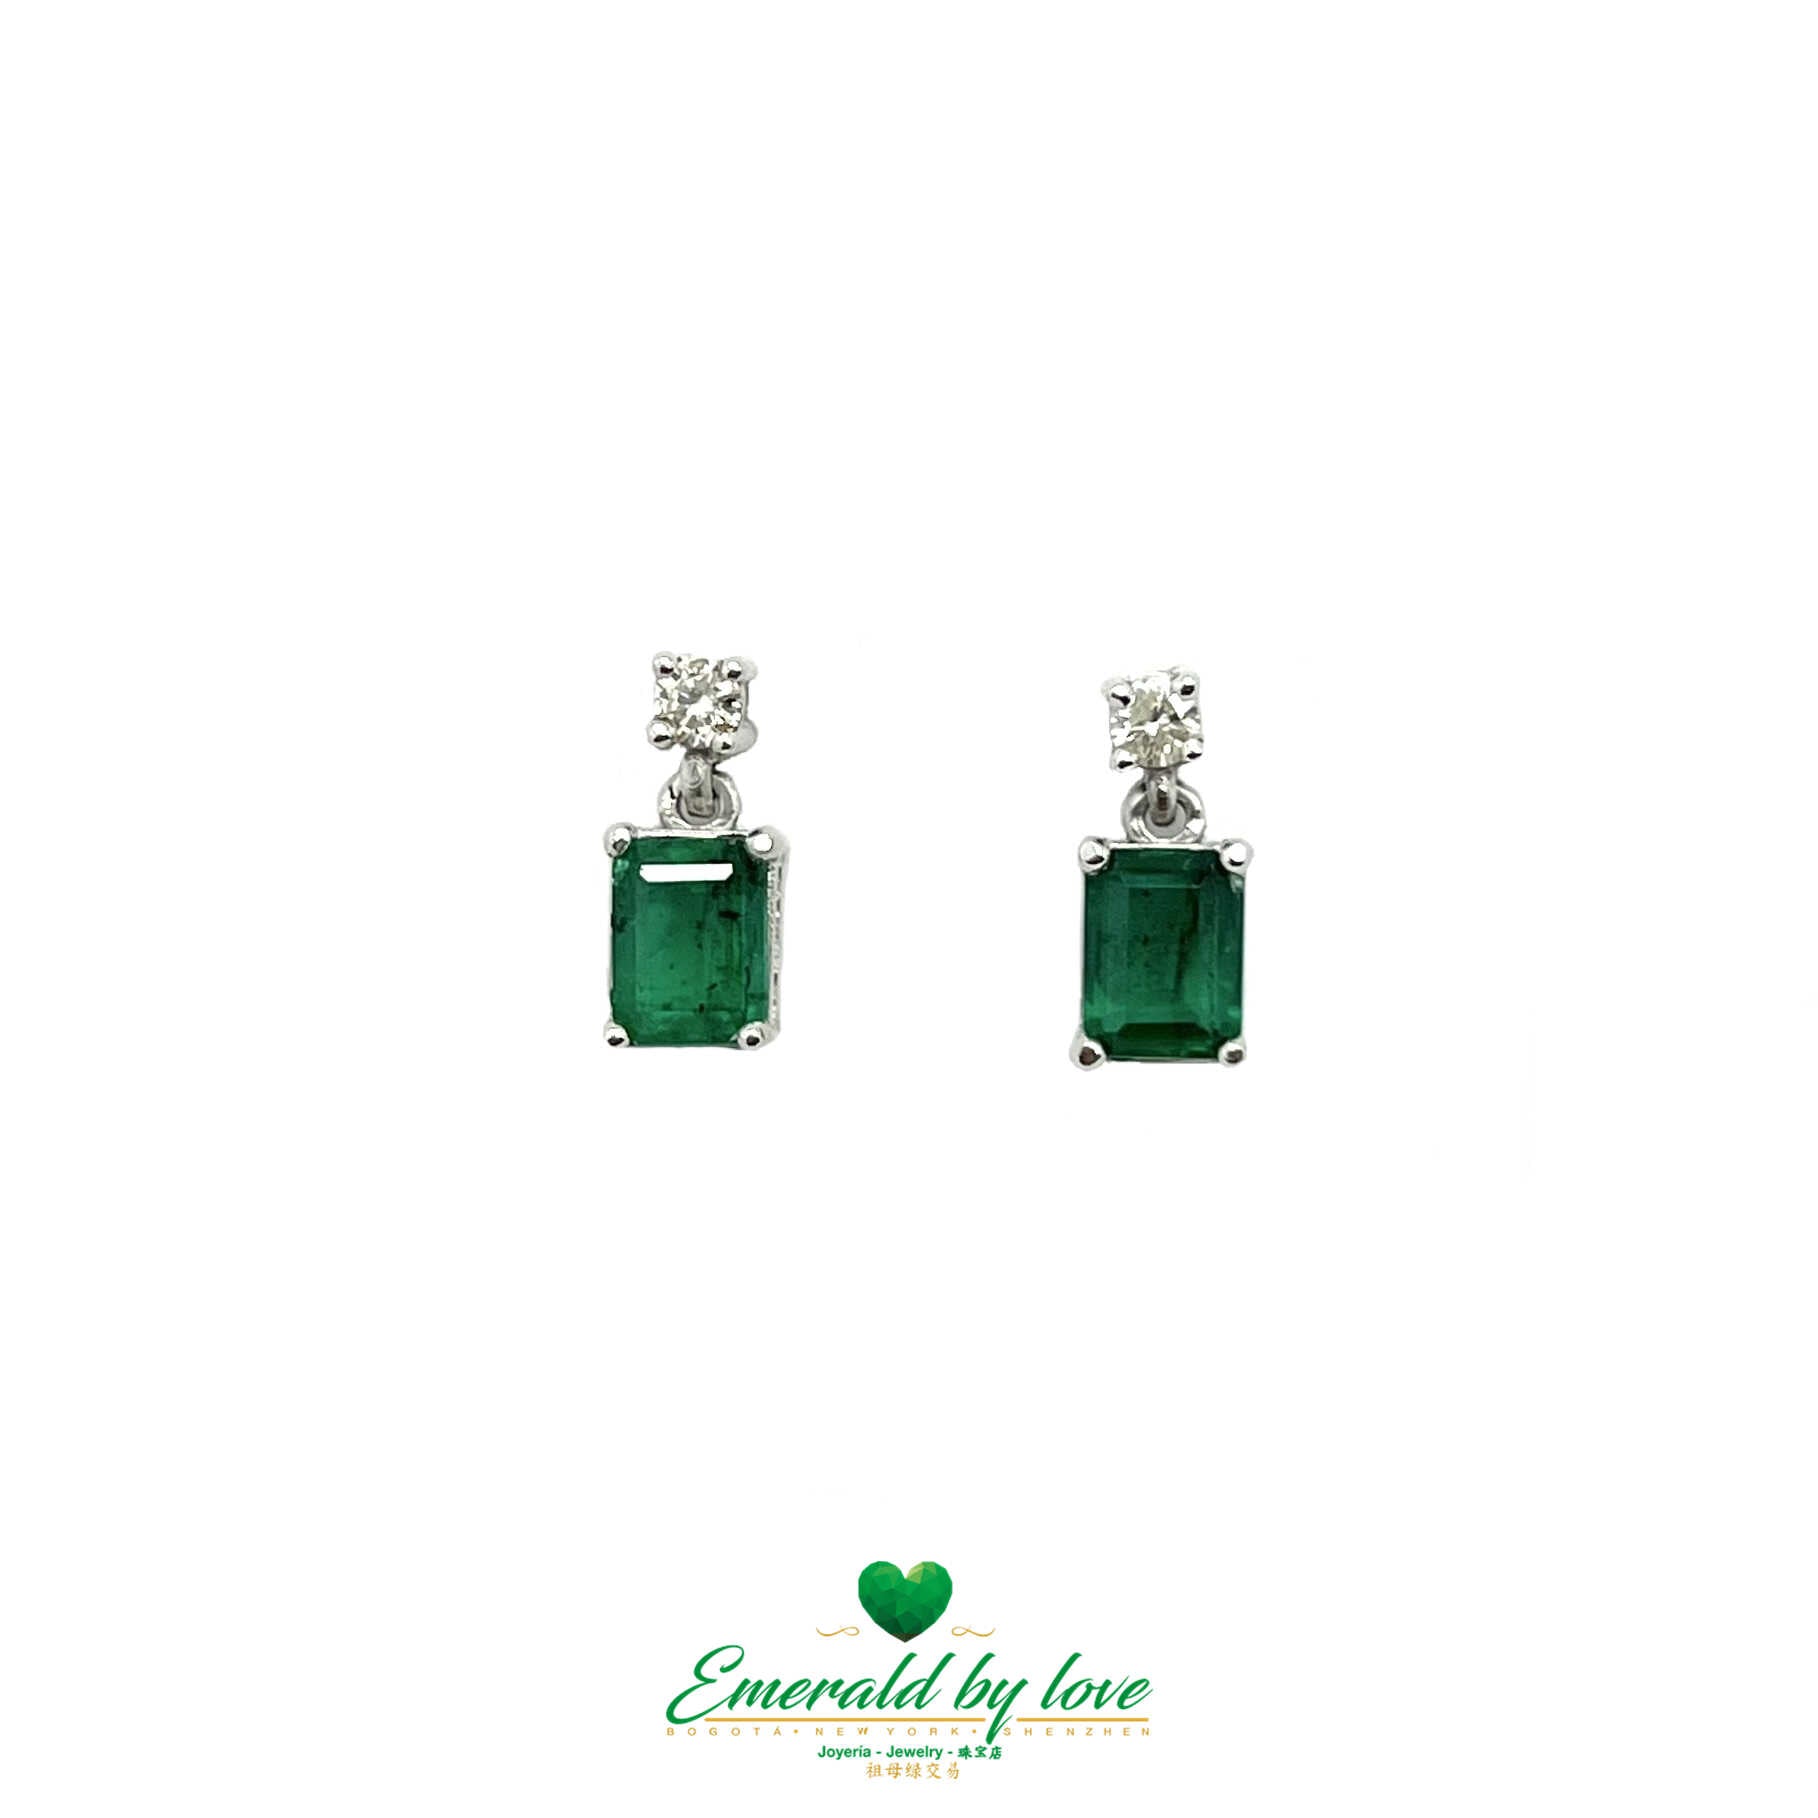 Beautiful Colombian Emerald and Diamond White Gold Earrings - 1.46 Ct Emerald Cut Gems